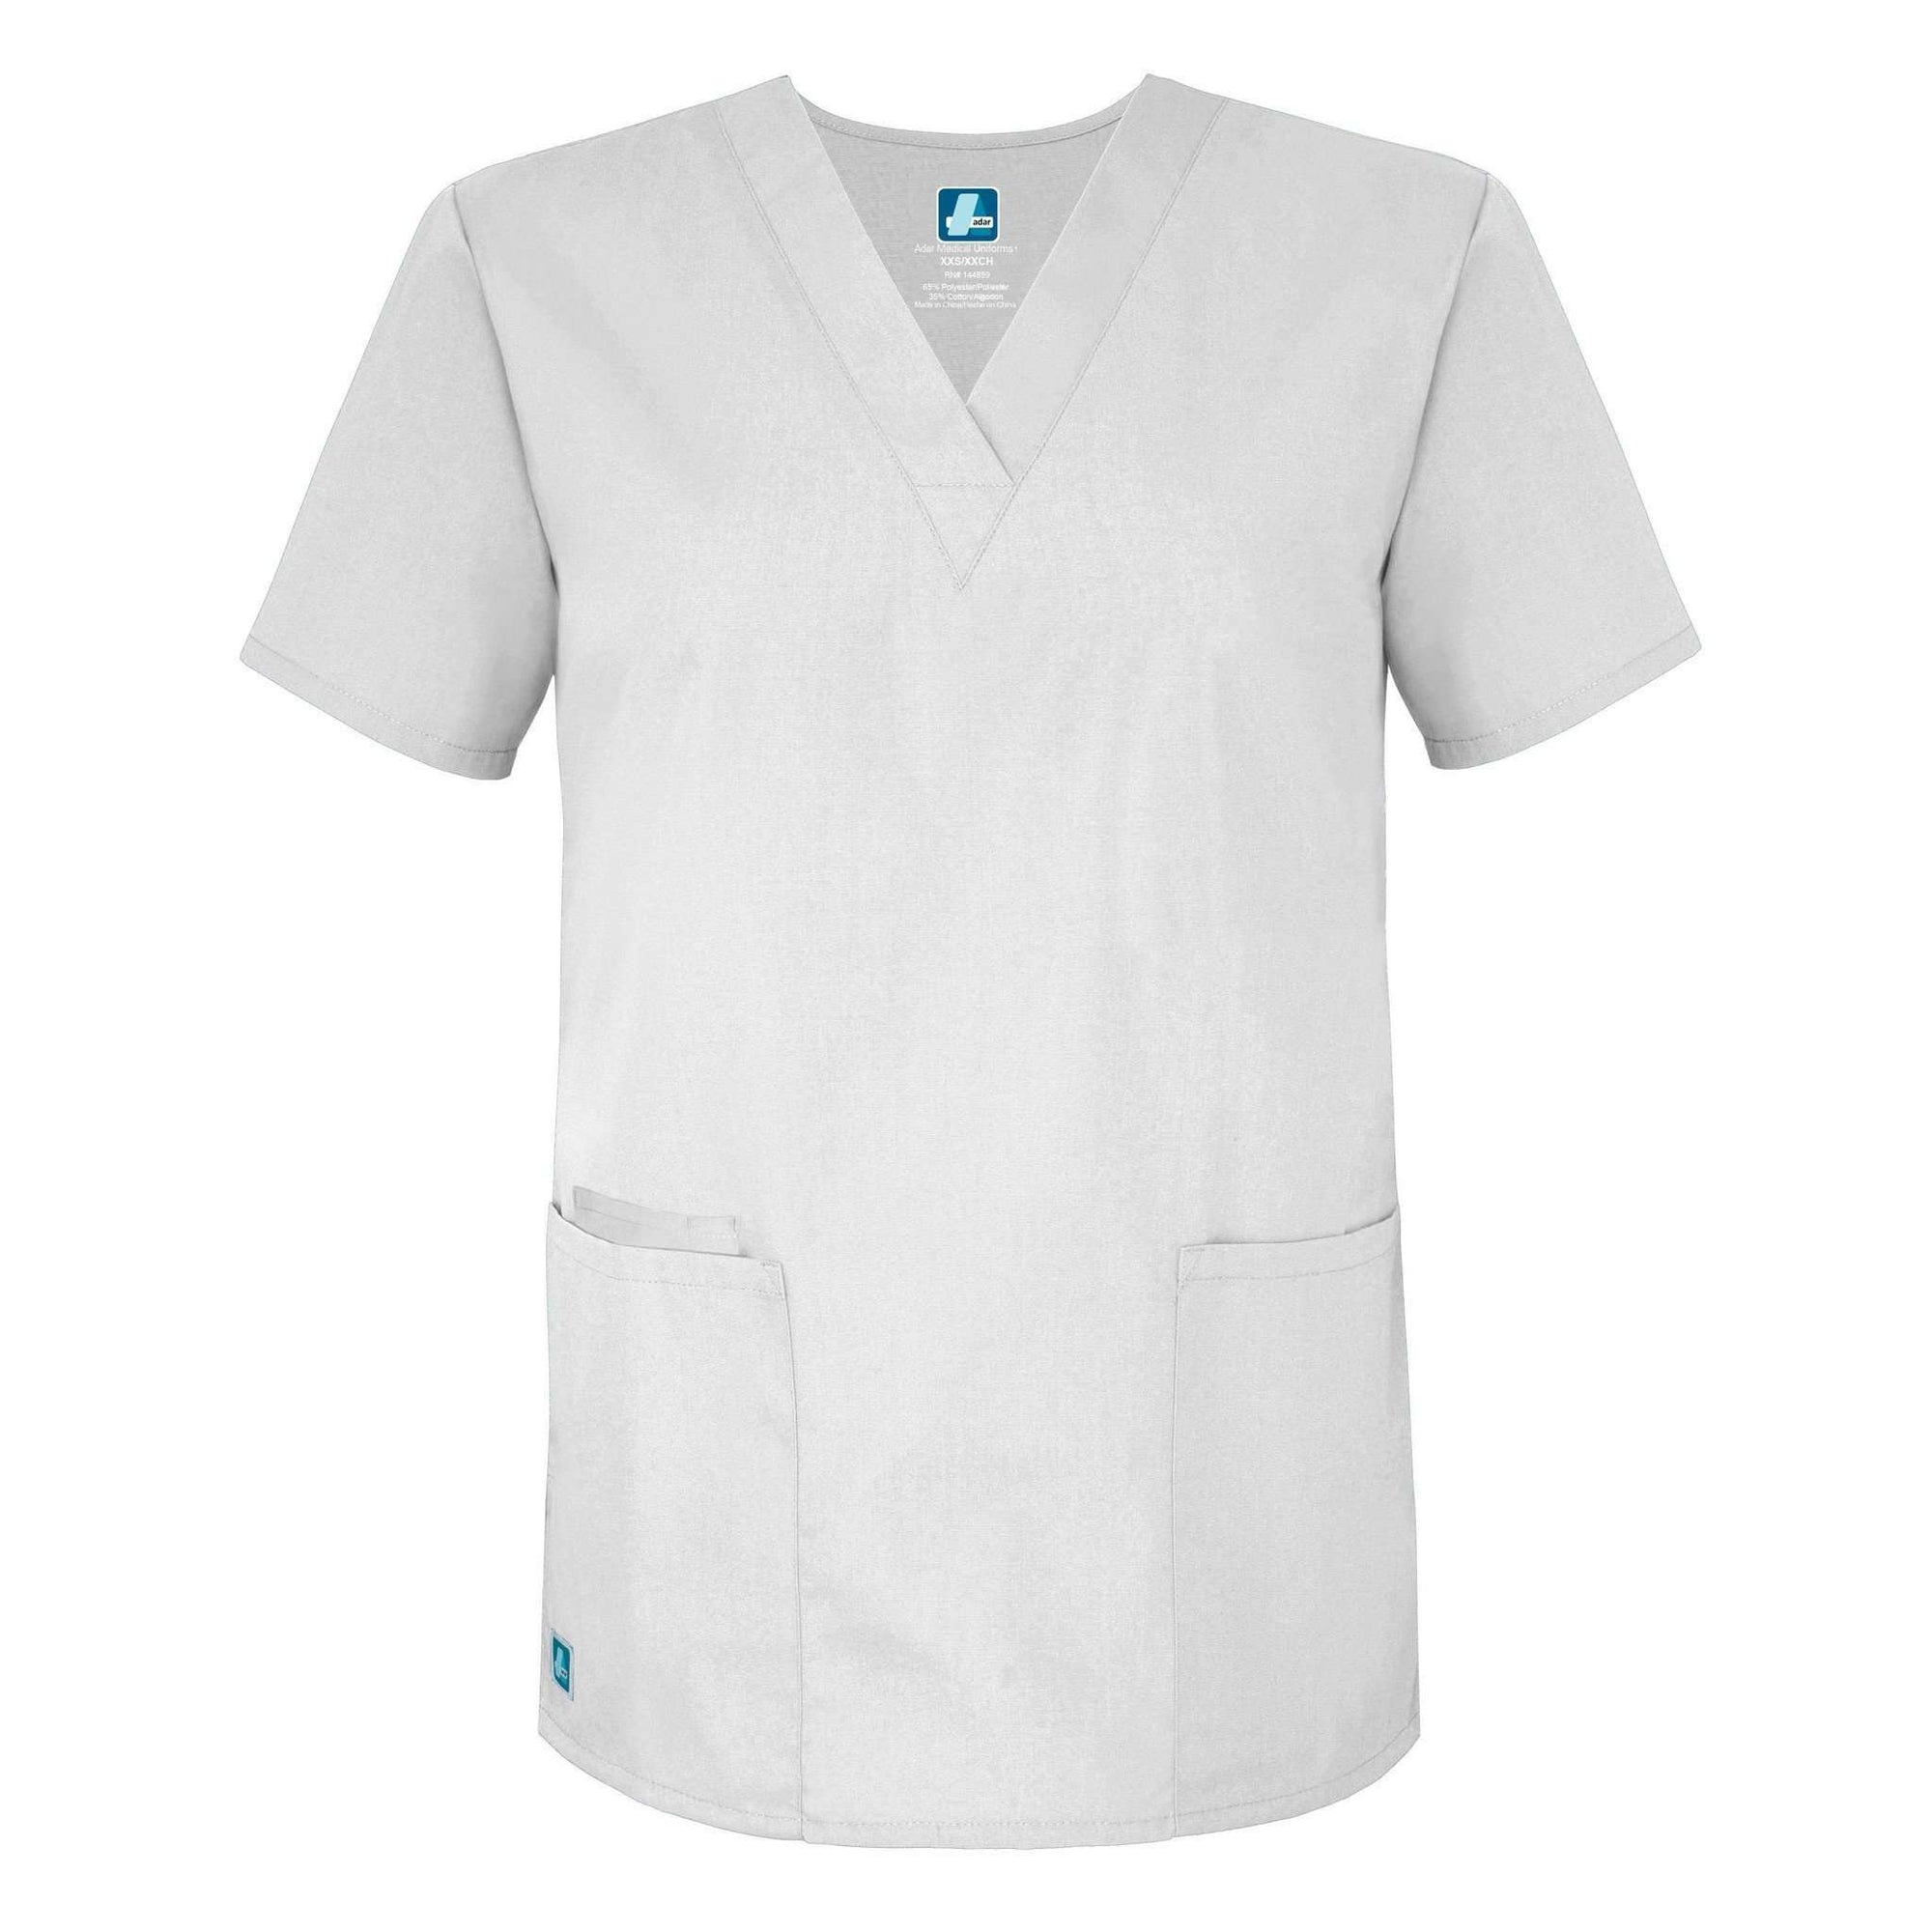  Adar - uniforms Medical Uniform Tops uniforms online Adar Universal Unisex V-Neck 2 Pocket Scrub Top White M - SchoolUniforms.com